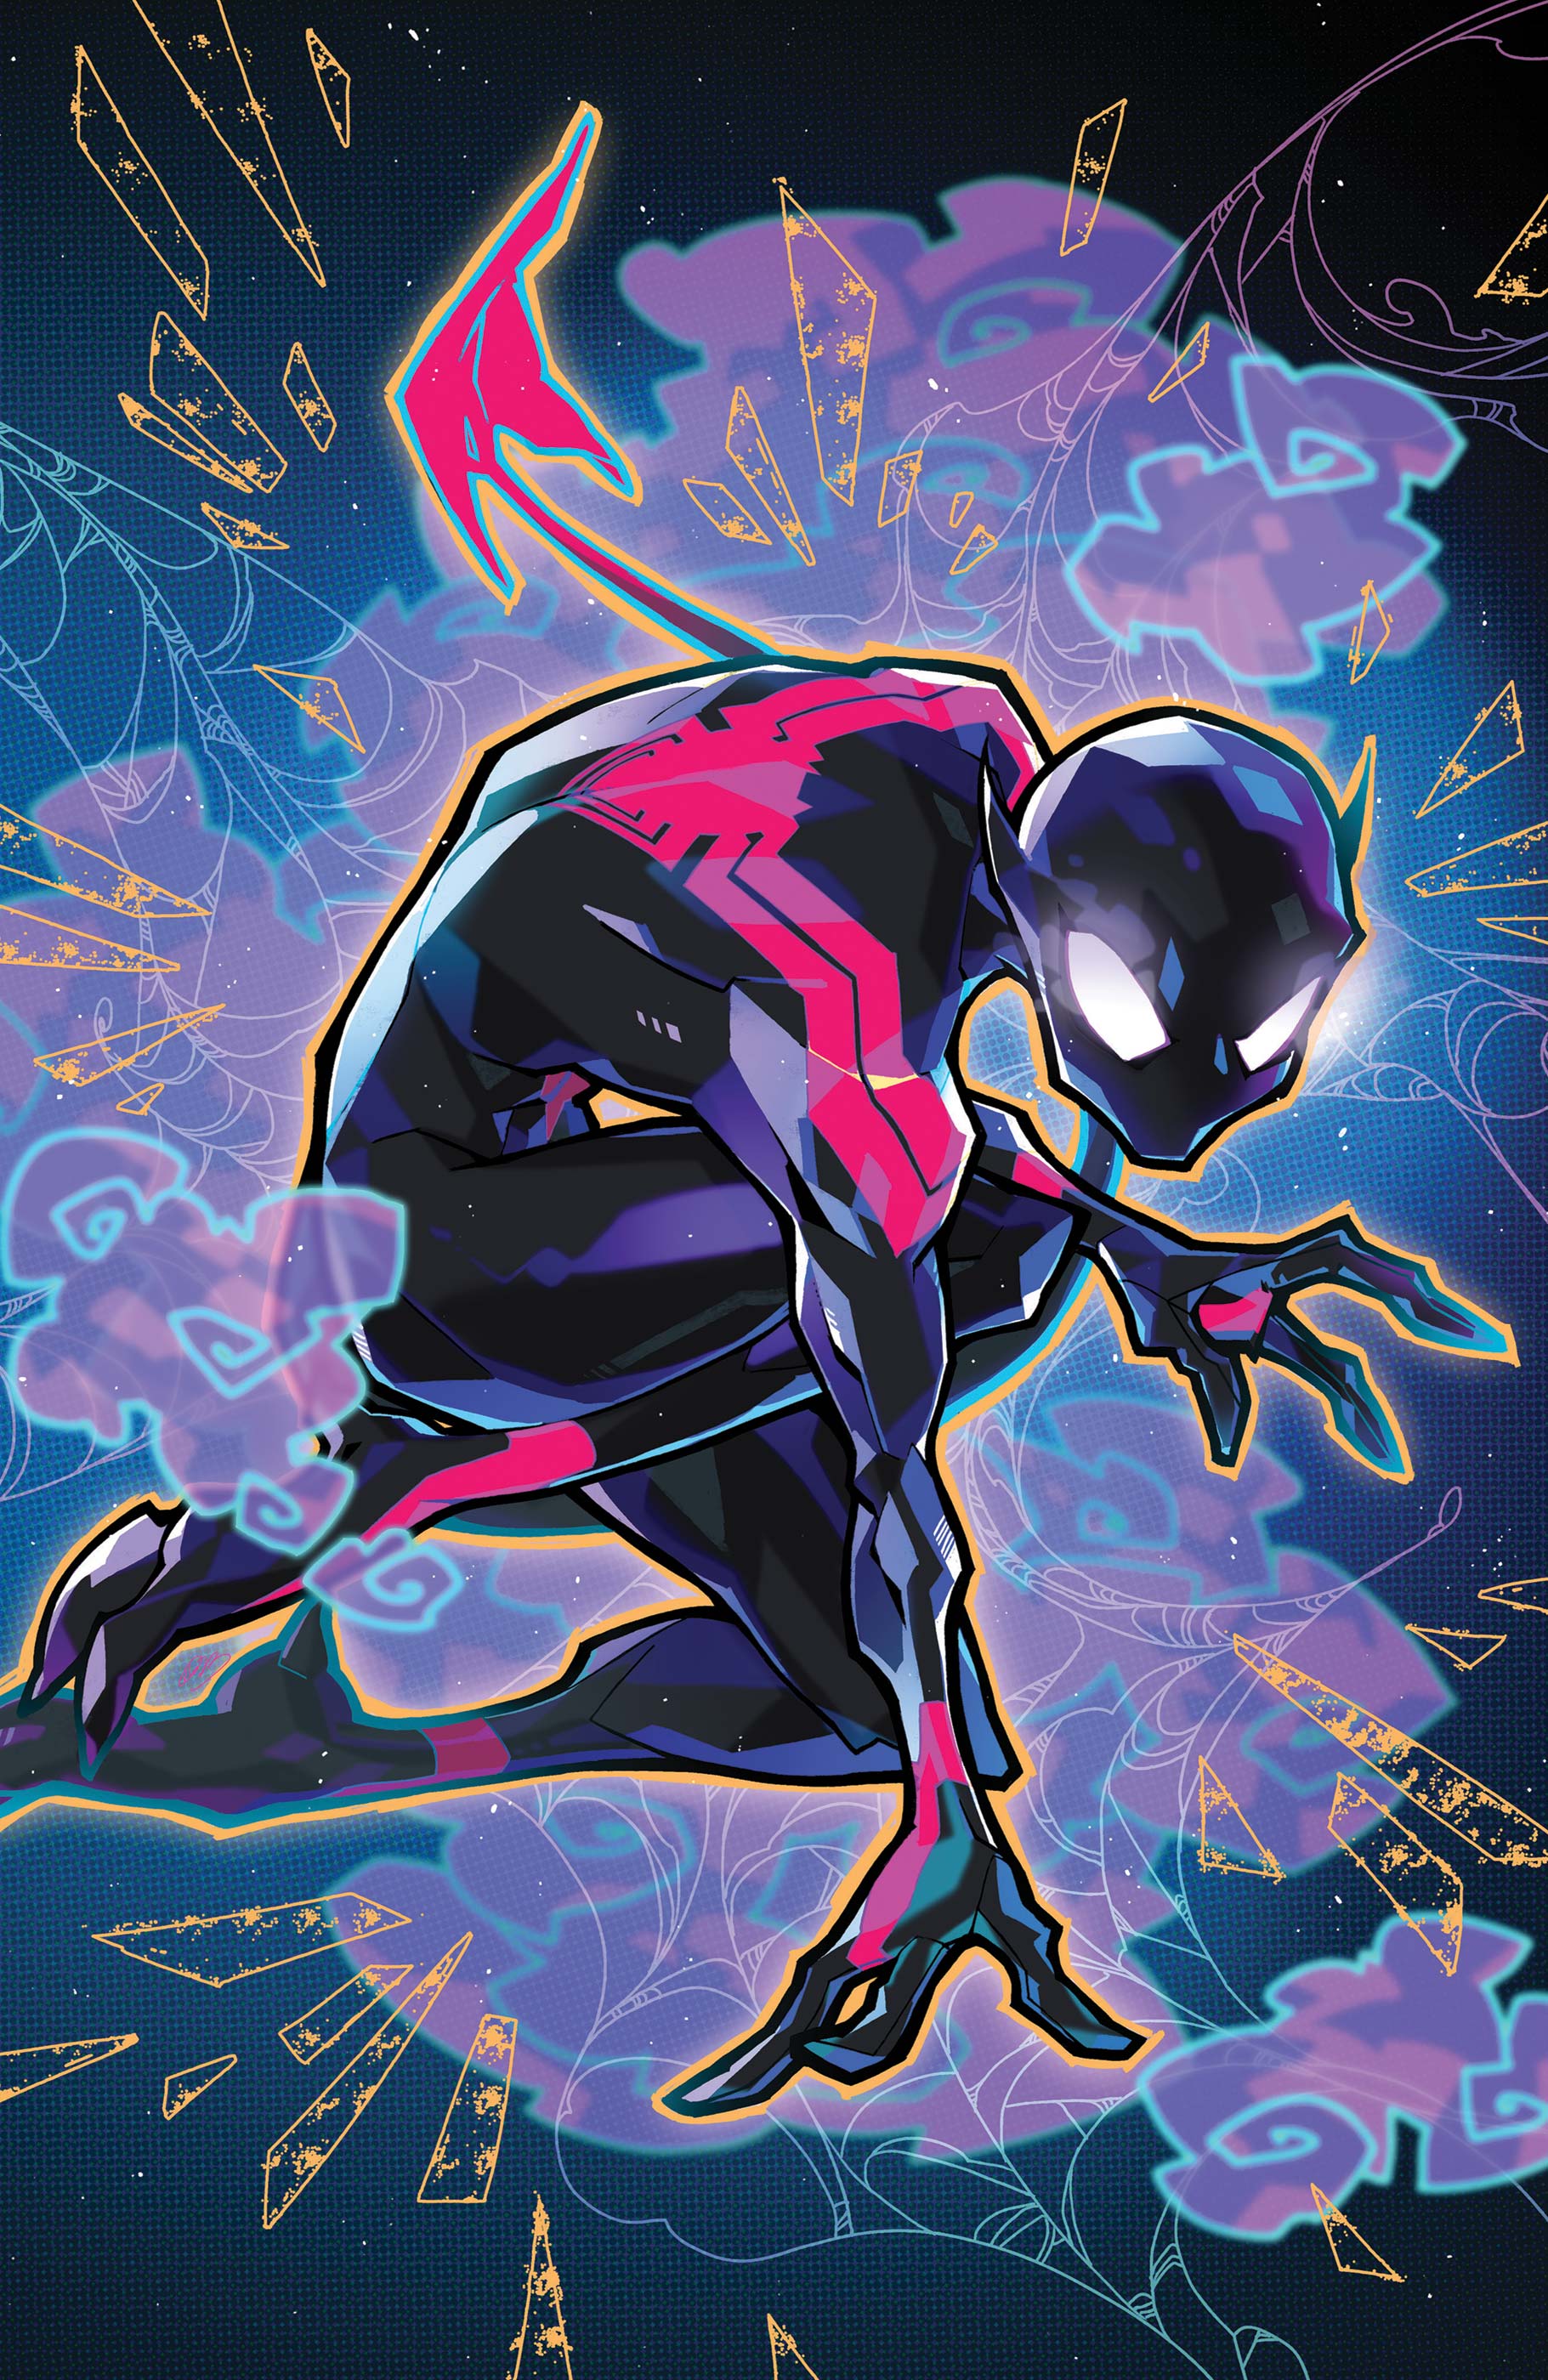 Uncanny Spider-Man (2023) #2 (Variant)